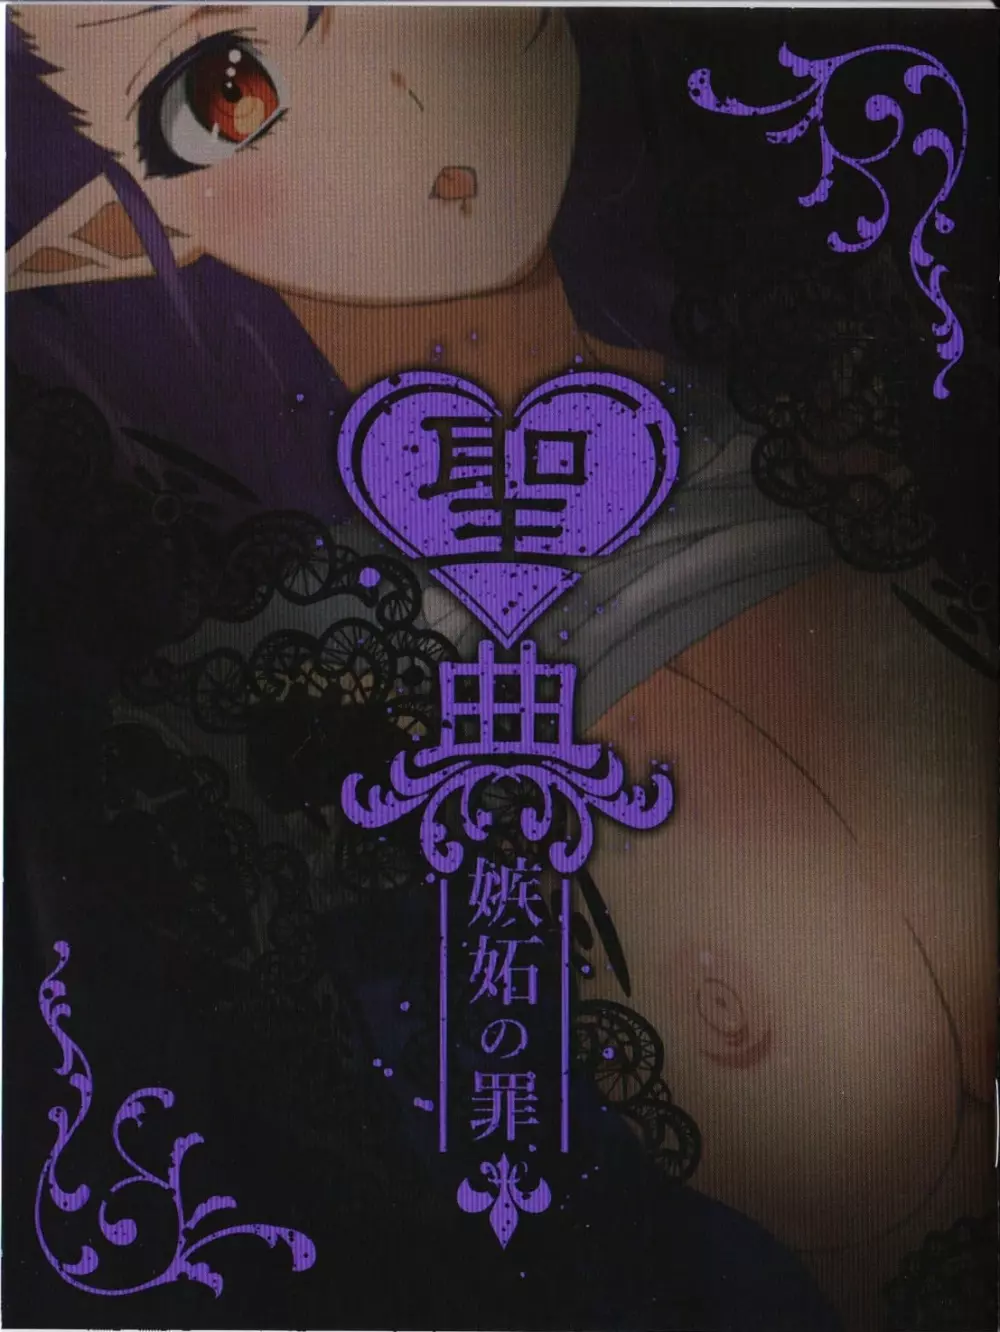 Sin: Nanatsu No Taizai Vol.2 Limited Edition booklet